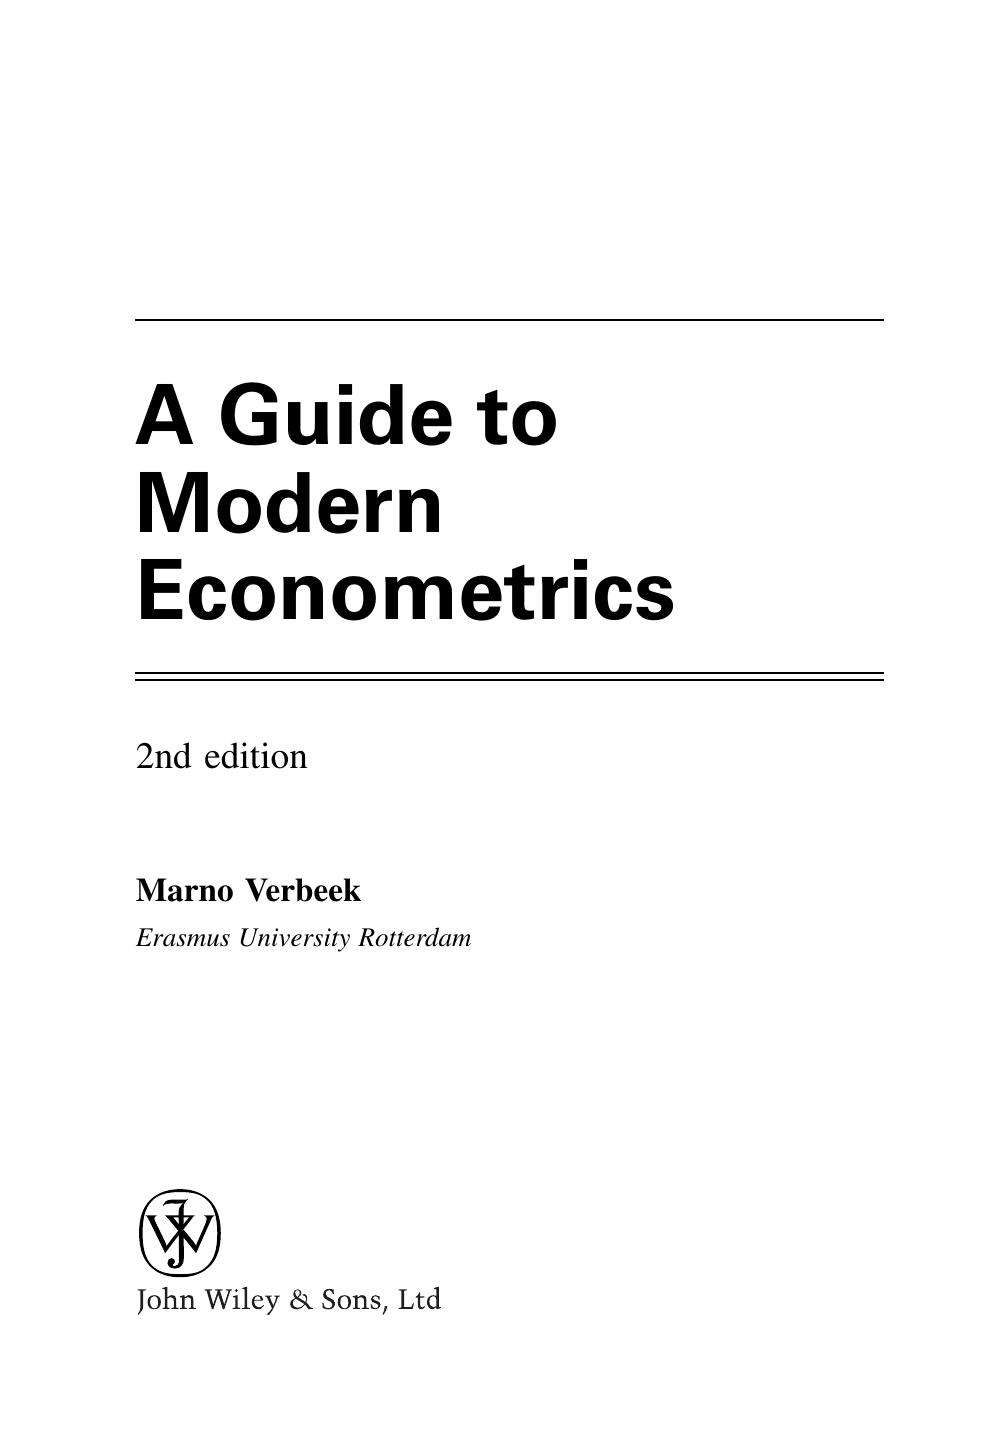 A guide to modern econometrics Marno Verbeek 2004pdf